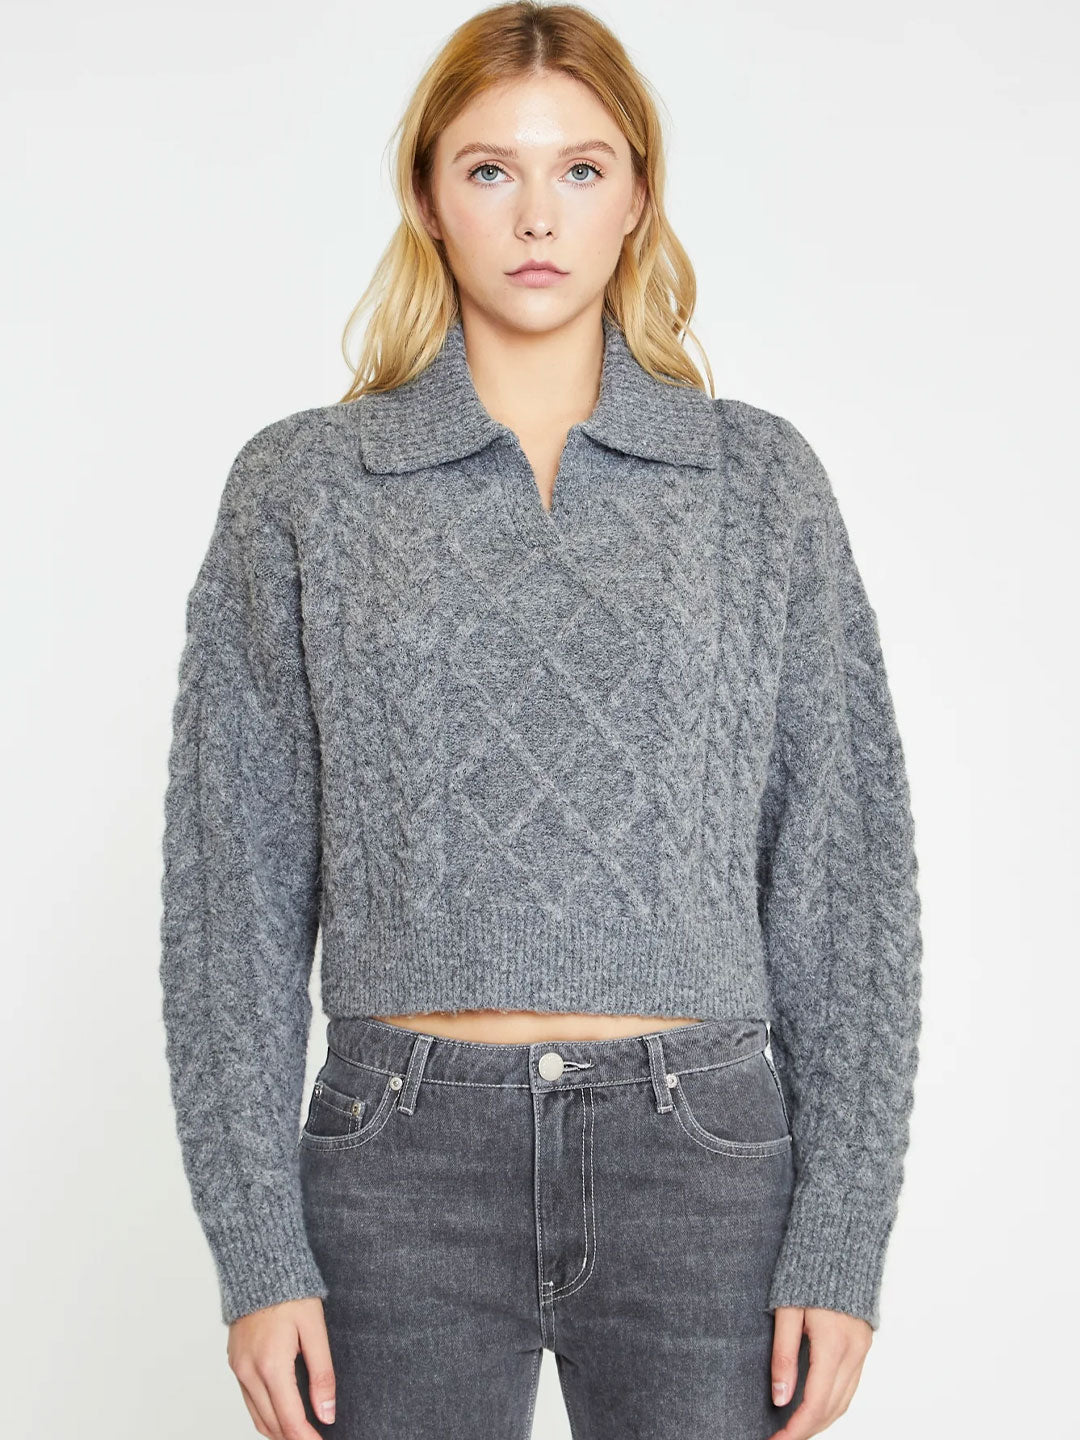 Glamorous gray crop sweater